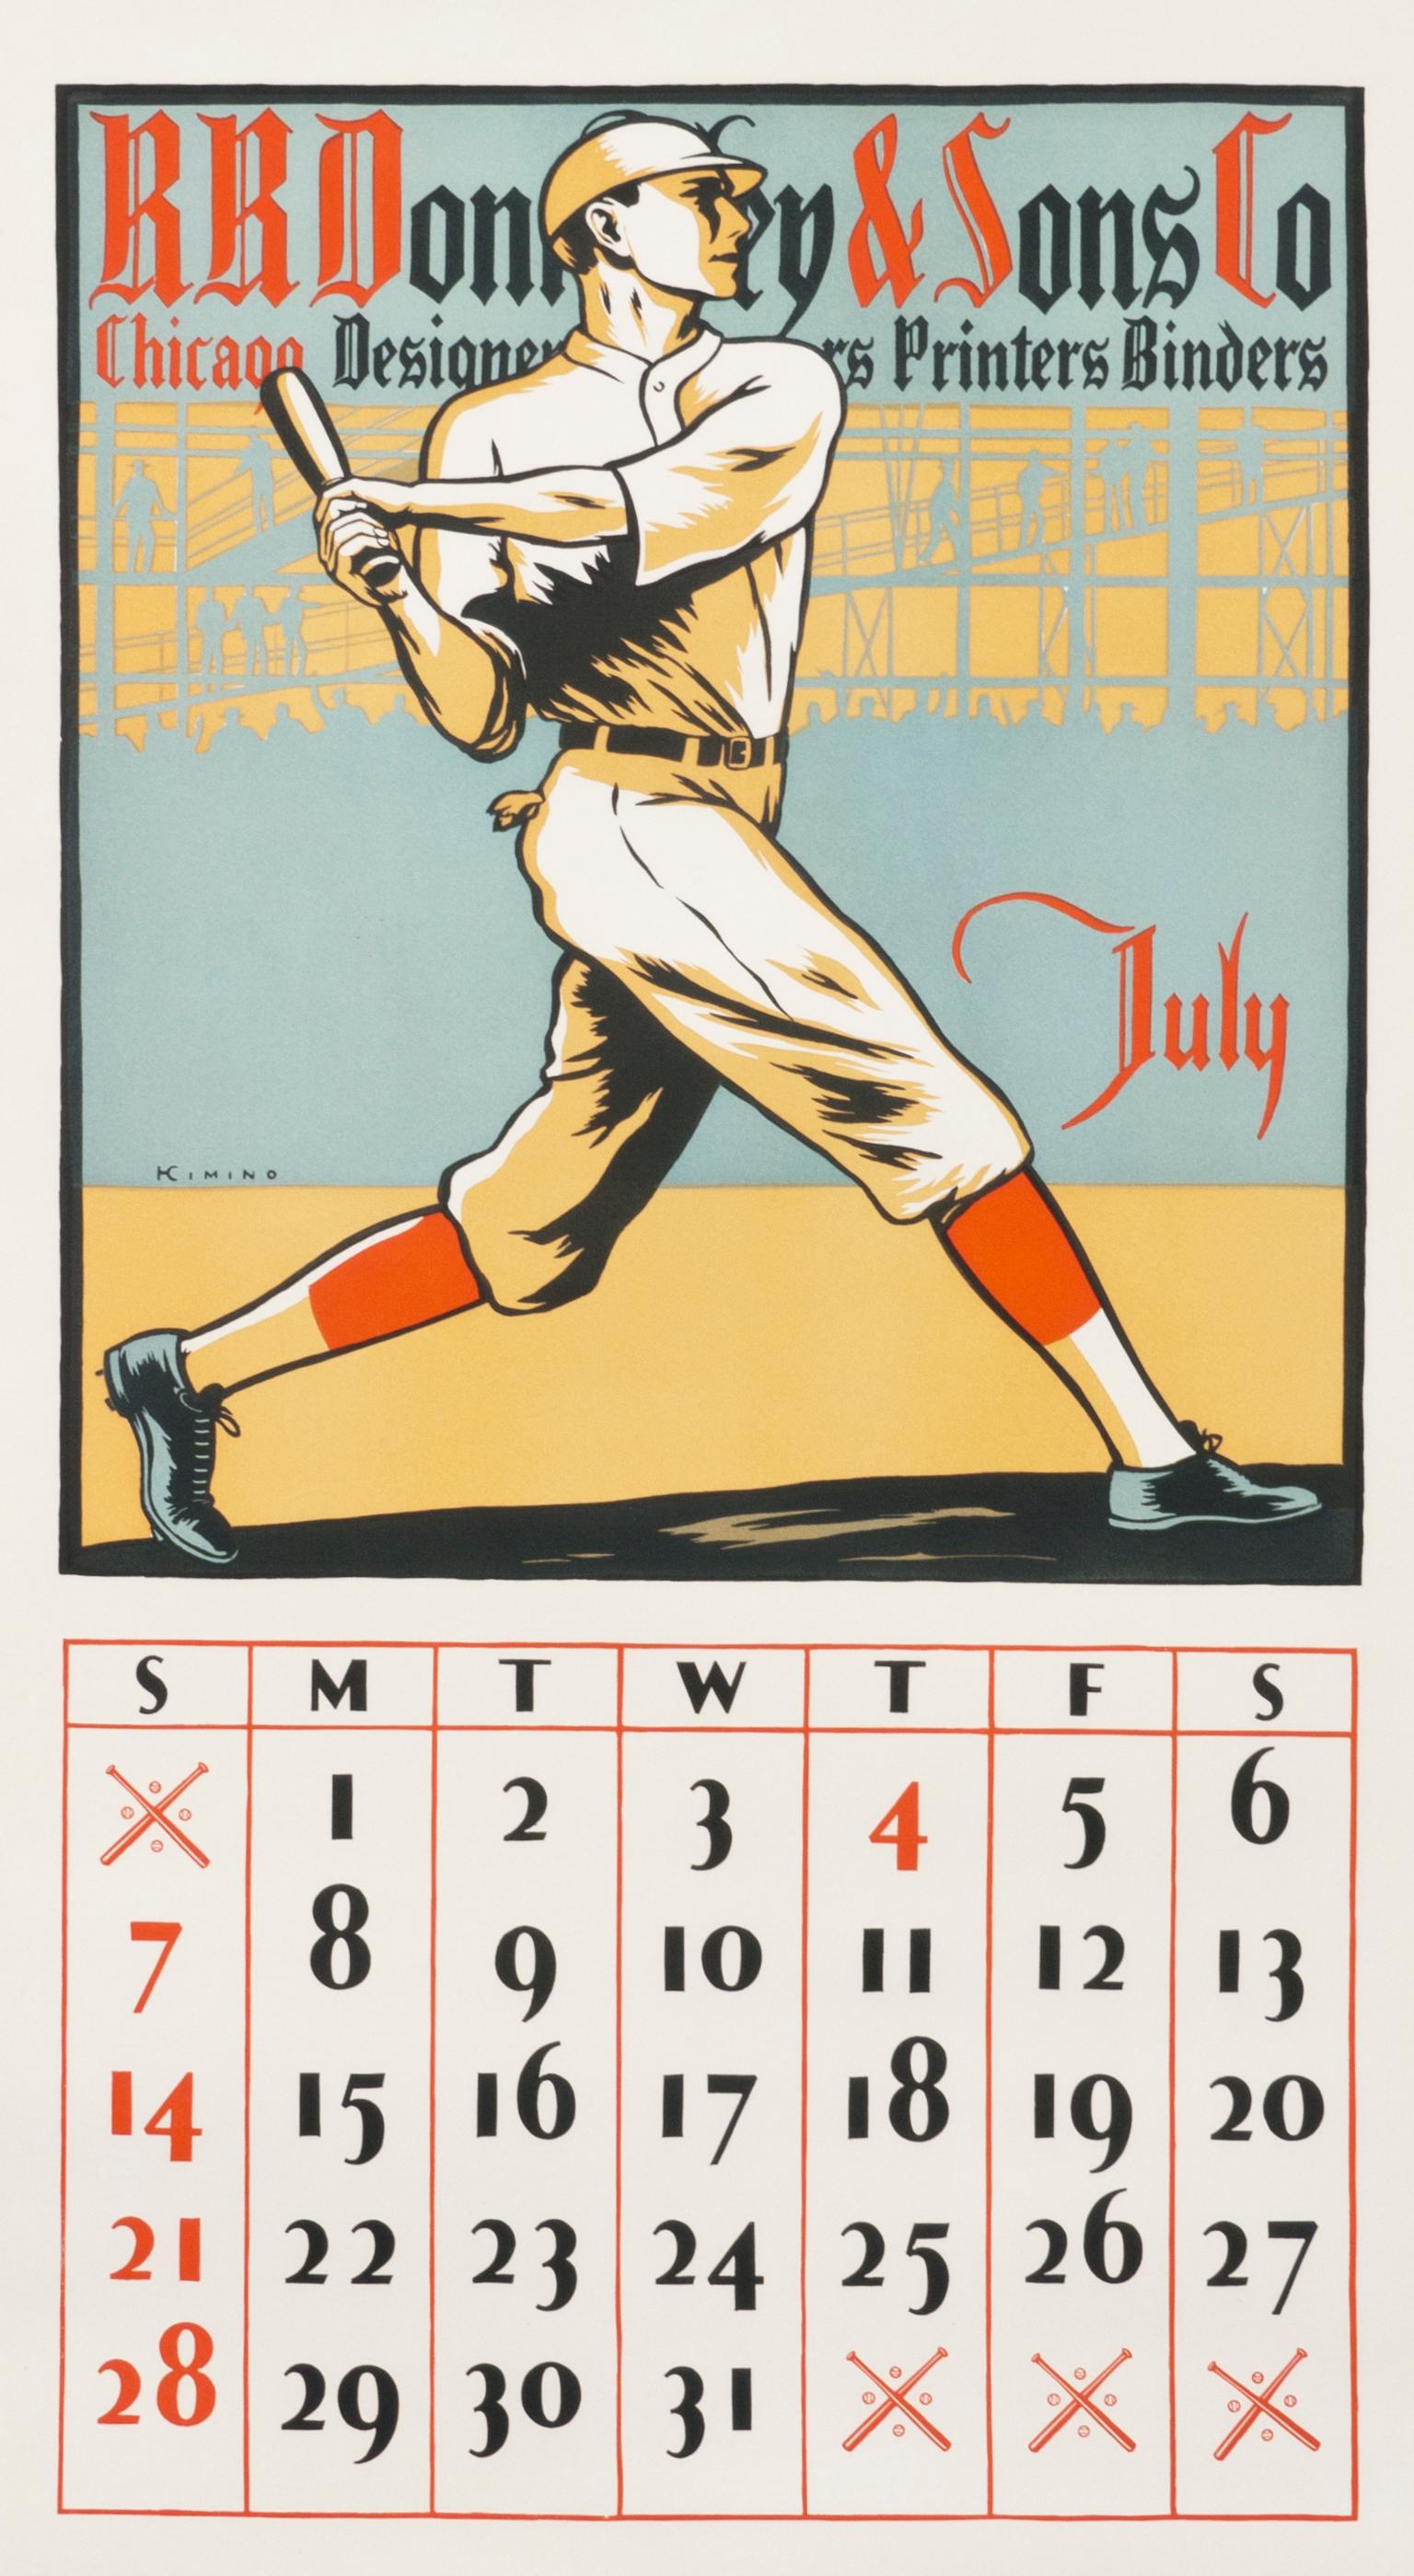 "RR Donnelley & Sons Co - July" Original Vintage Calendar Poster - Baseball 1920 - Print by Harry Cimino